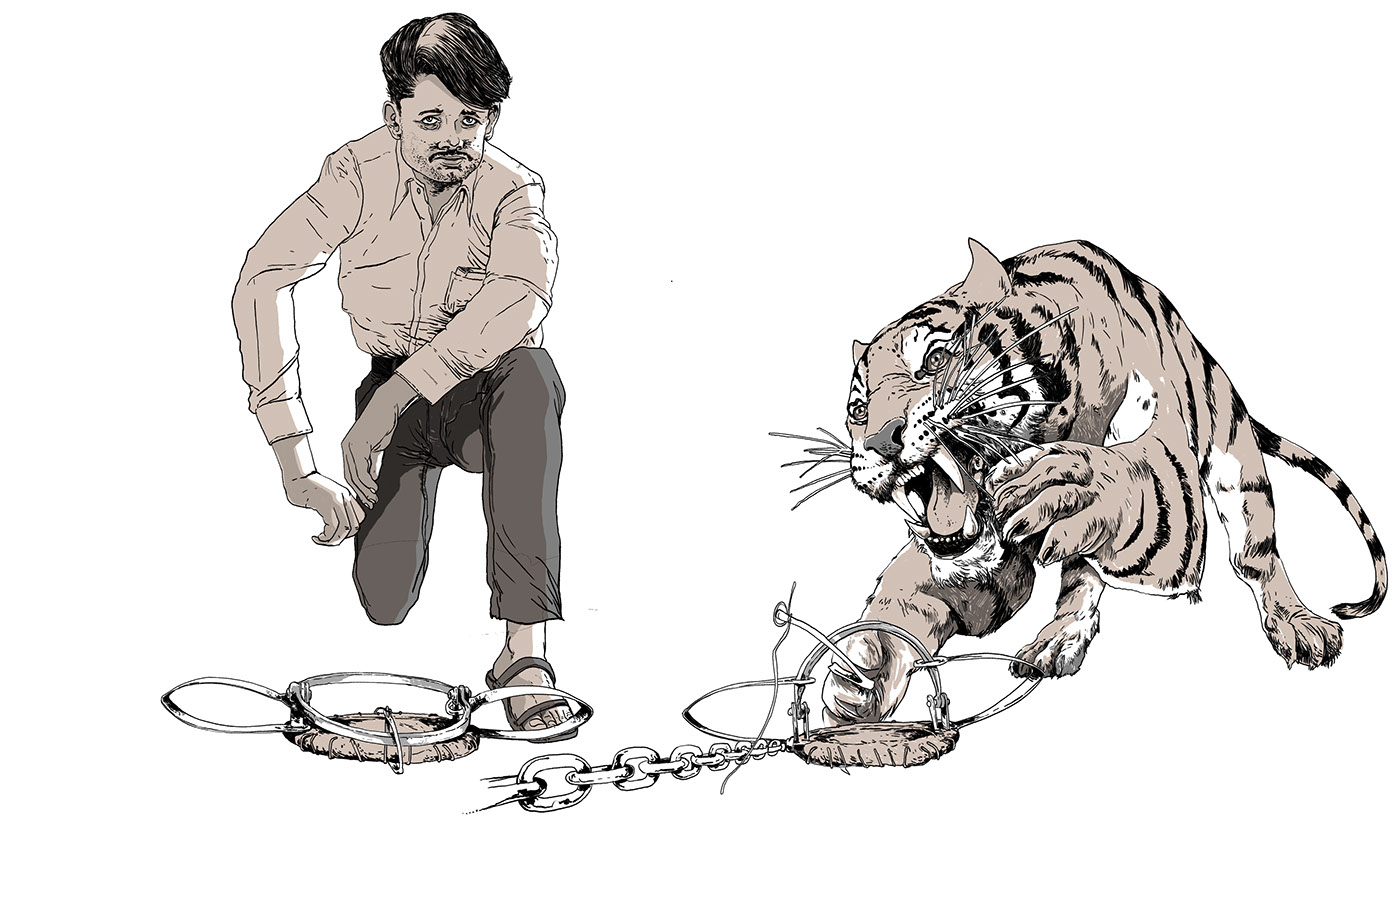 #infographic #Infografía #interactive   #bengaltiger #Poaching #India #WPSI #graphicDesign